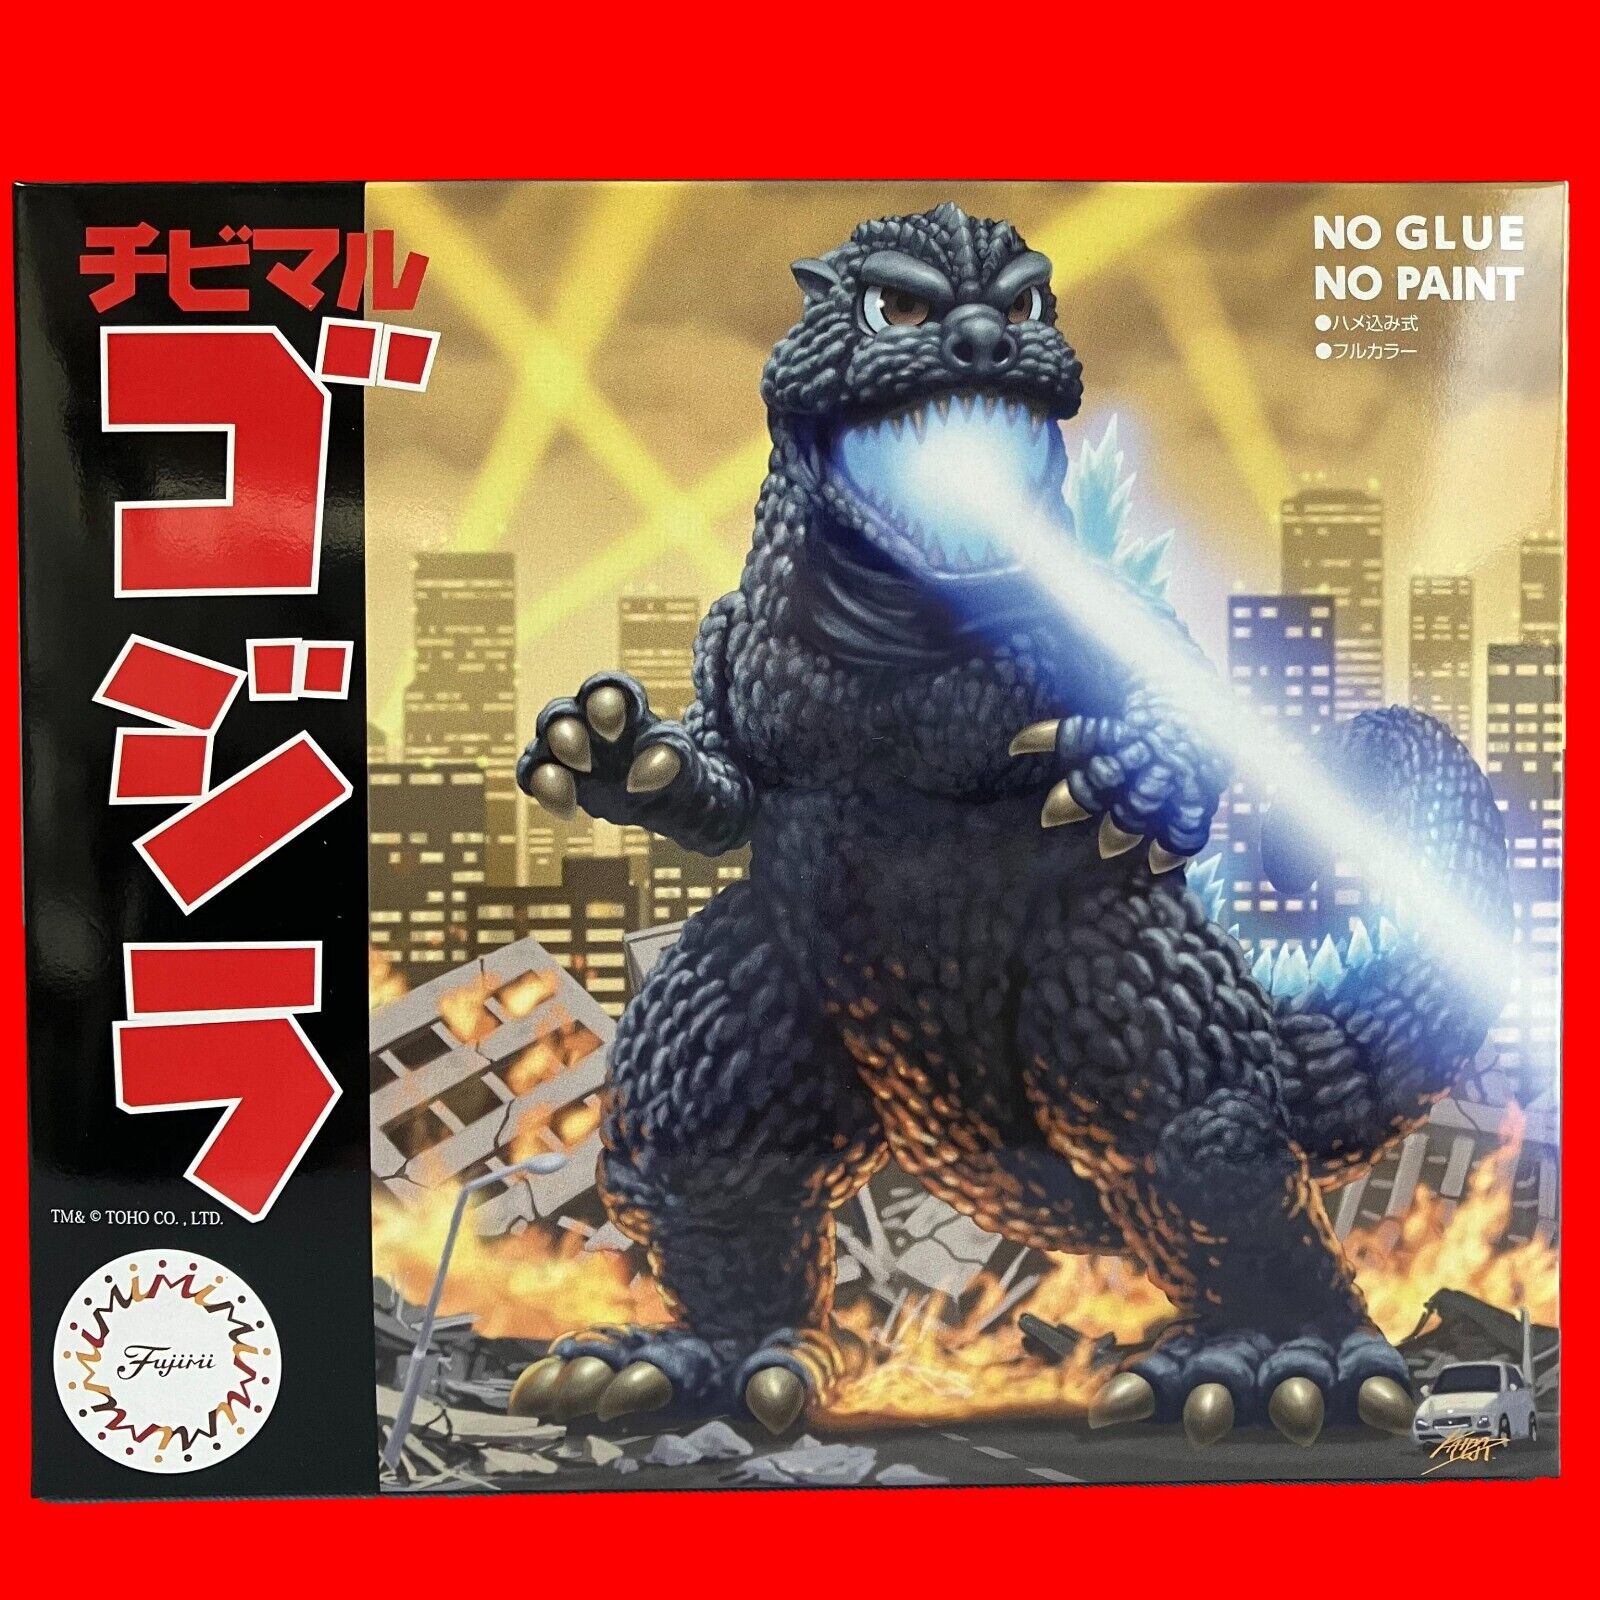 Fujimi Model Chibimaru Godzilla Series No.1 Plastic Model Figure No Glue